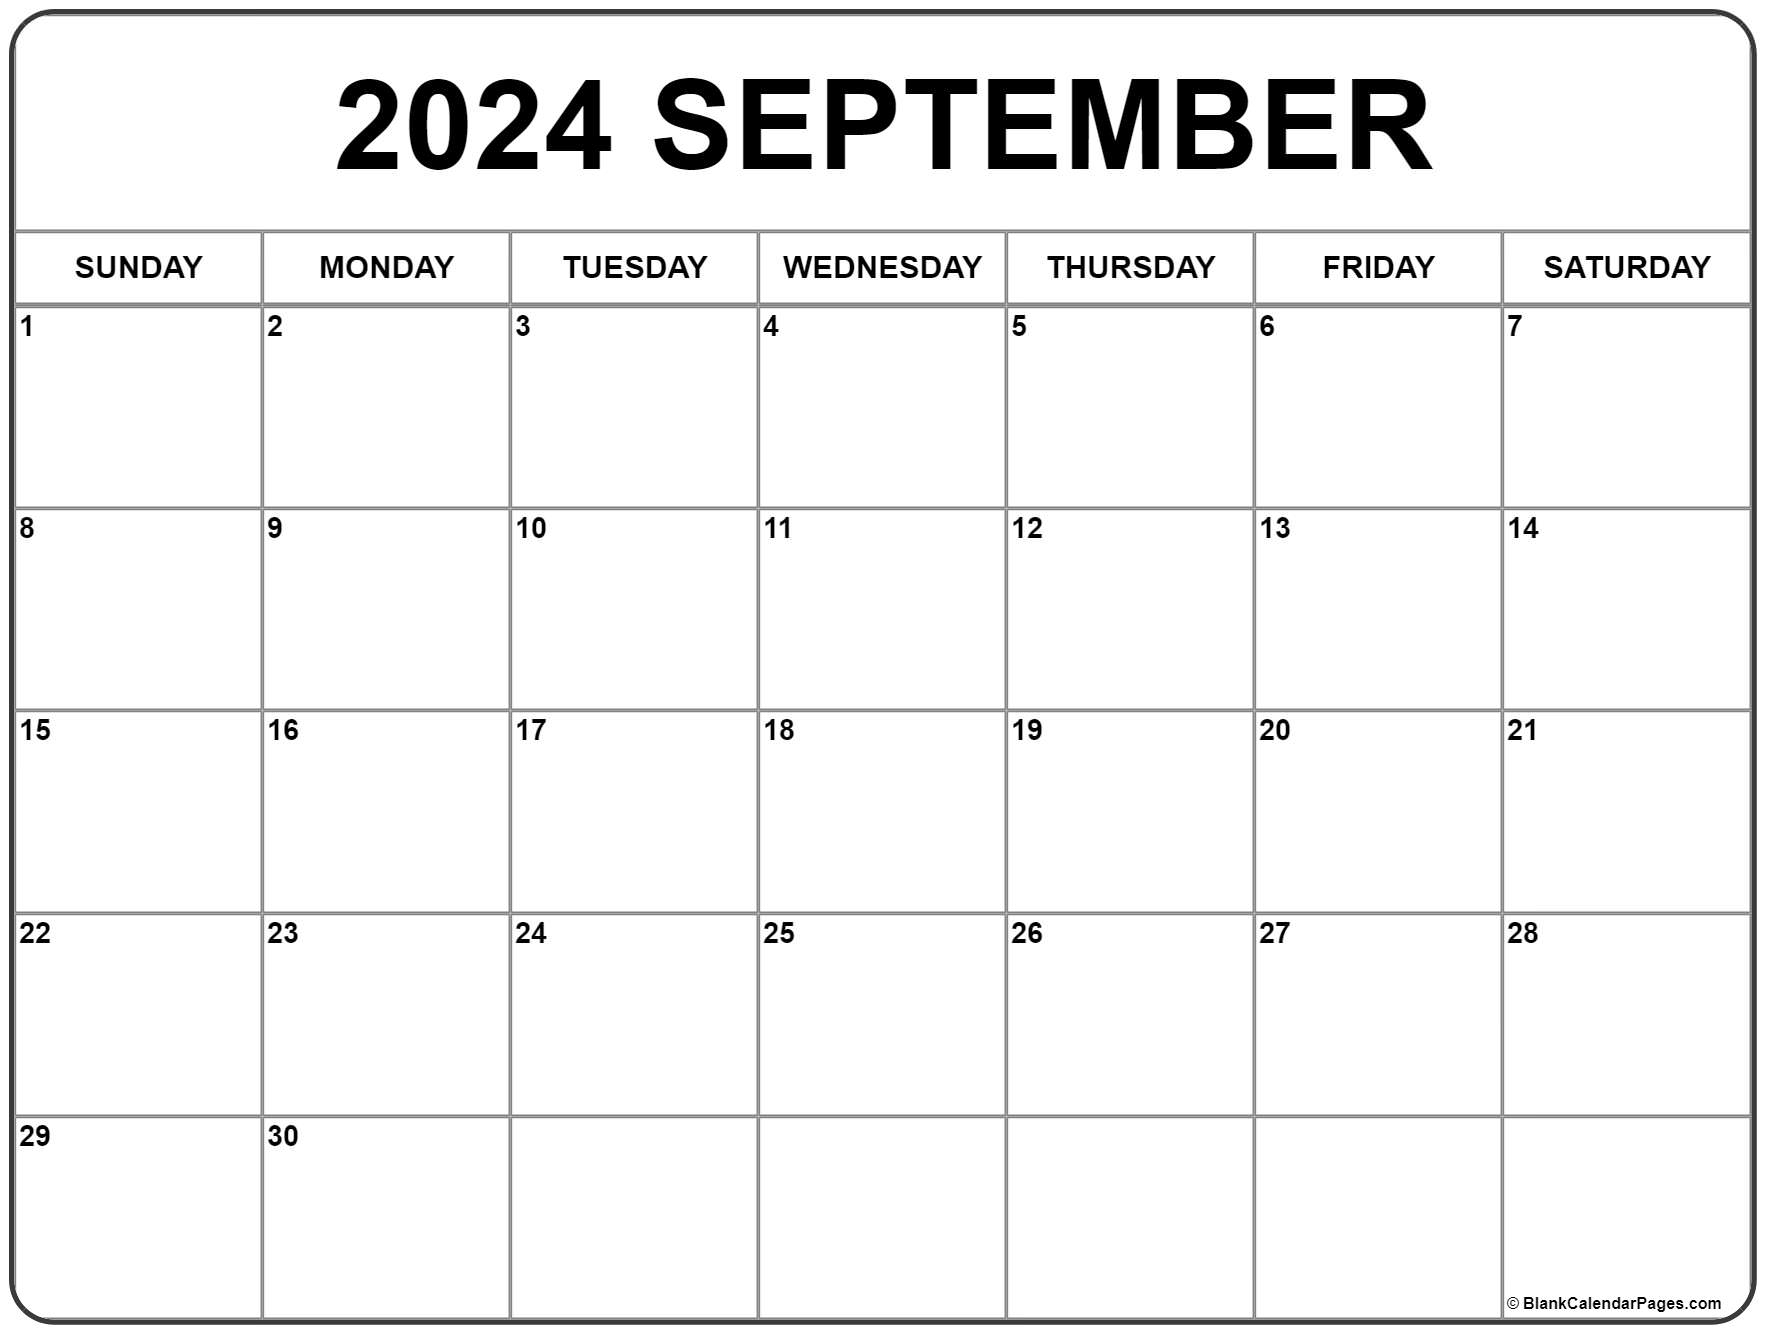 September 2024 Calendar | Free Printable Calendar for 2024 Calendar Printable September